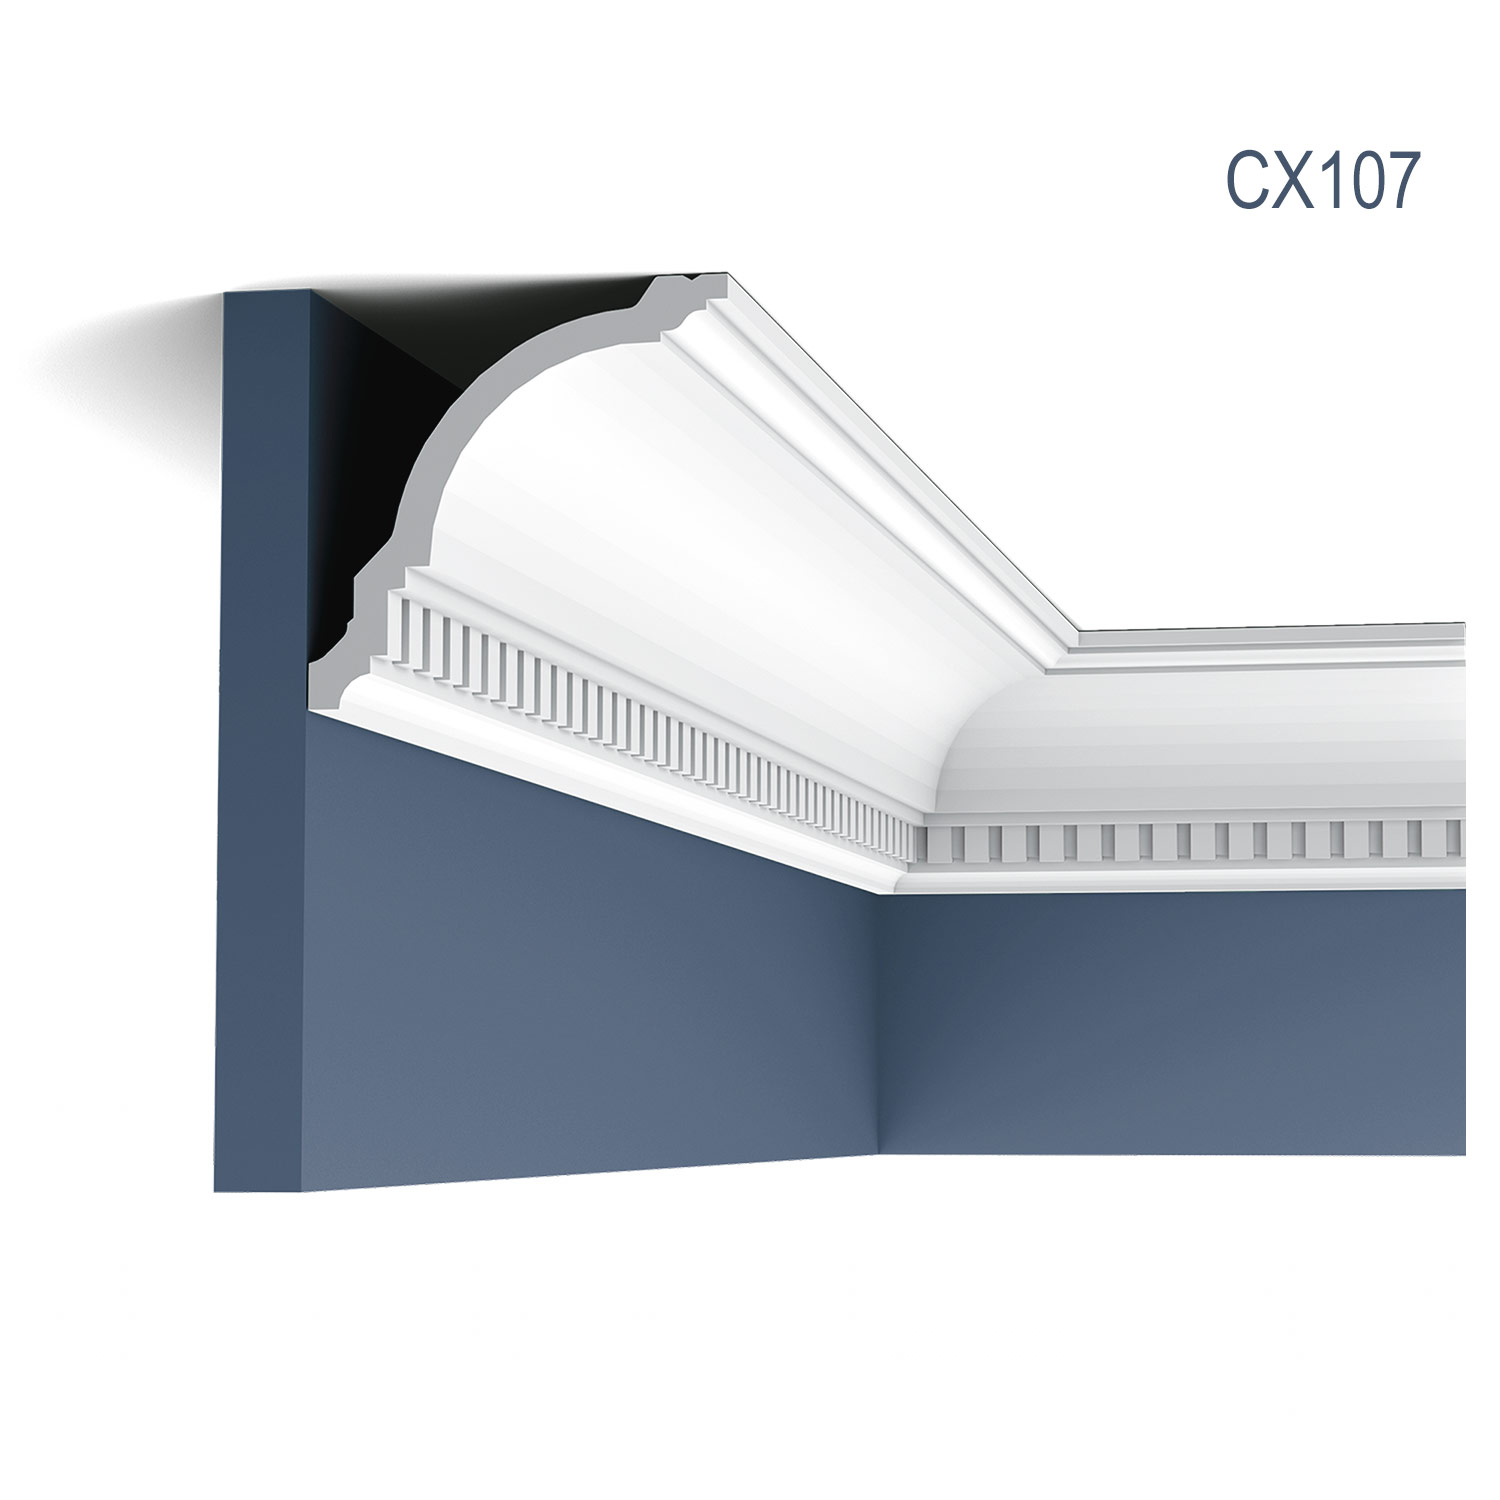 Cornisa Axxent CX107, Dimensiuni: 200 X 11.8 X 11.7 cm, Orac Decor